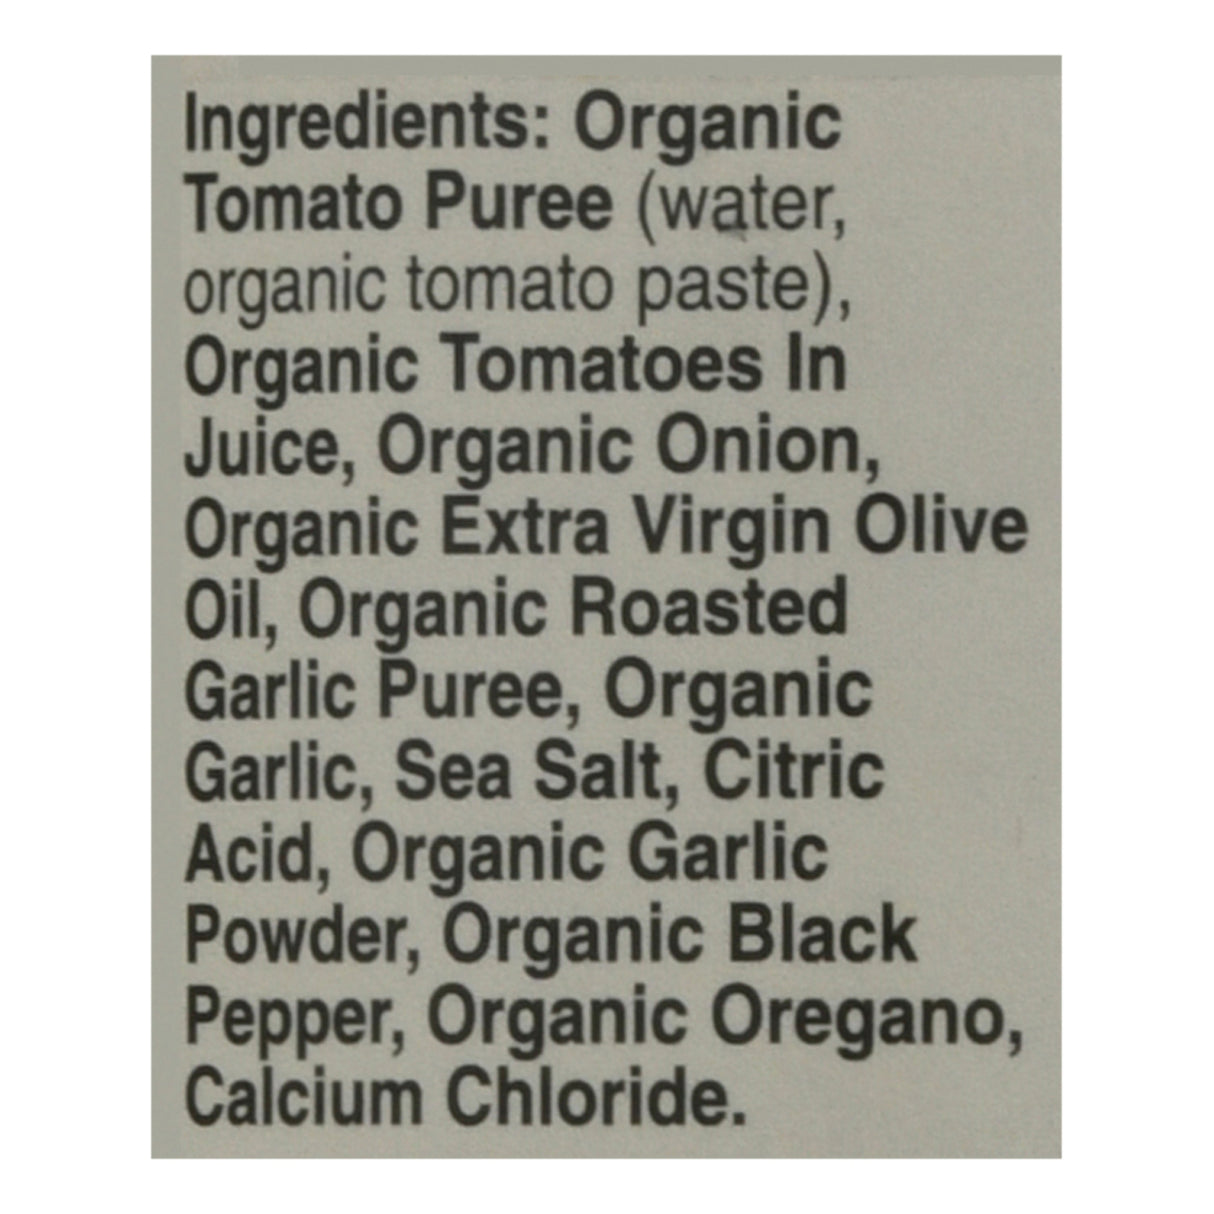 Muir Glen Organic Roasted Garlic Pasta Sauce - 12 Pack - 23.5 fl. oz. - Cozy Farm 